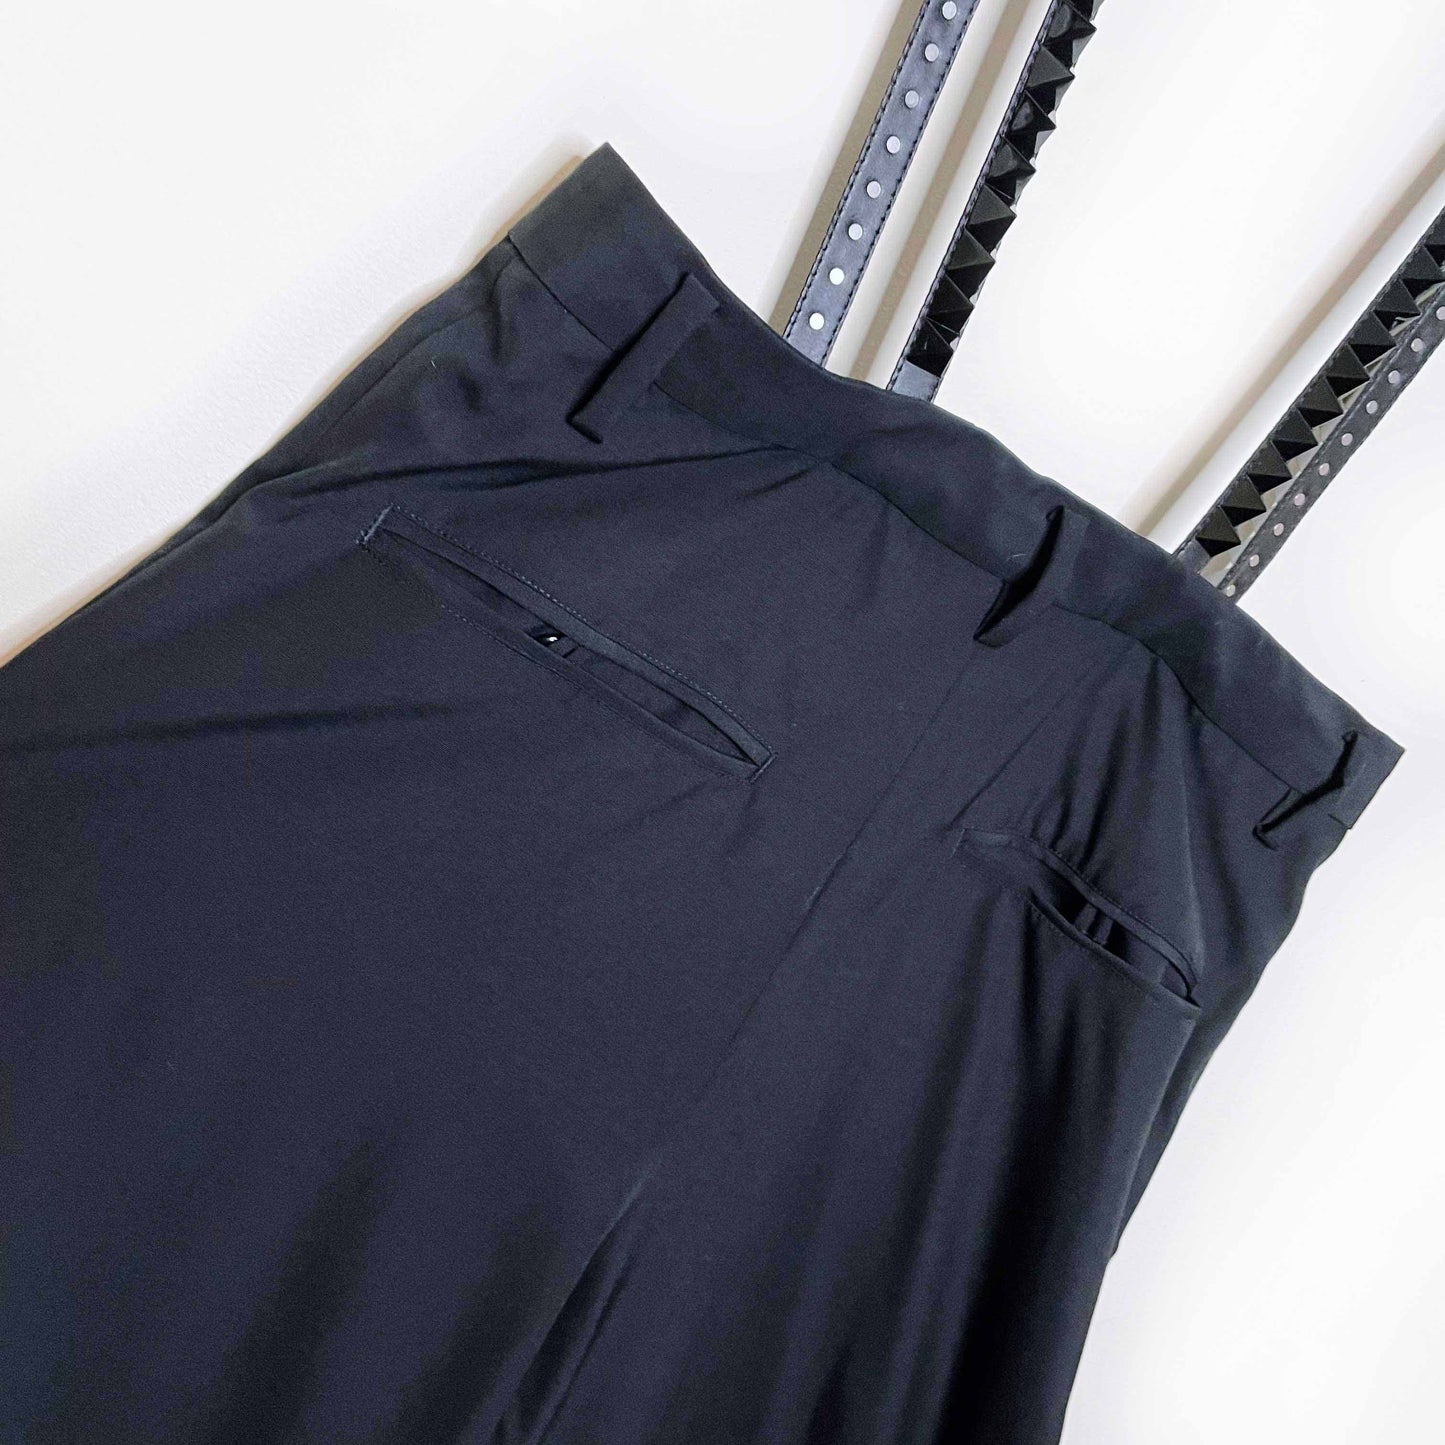 noir kei ninomiya x comme de garcons black studded harness trousers - size small